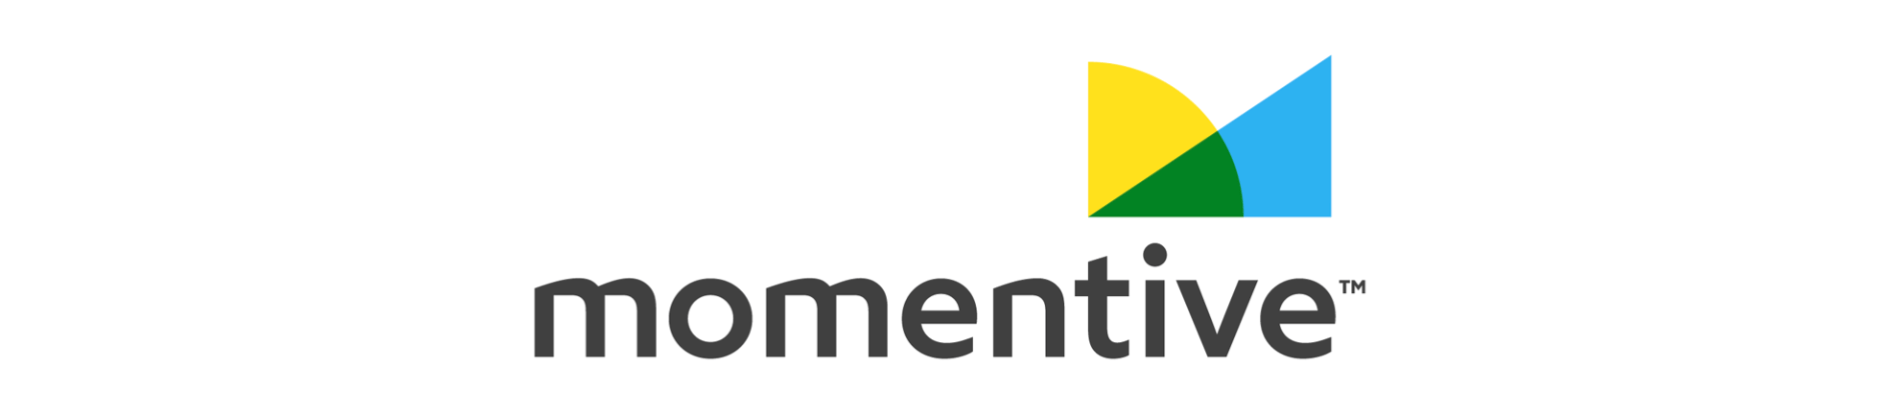 momentive-rebranding-example